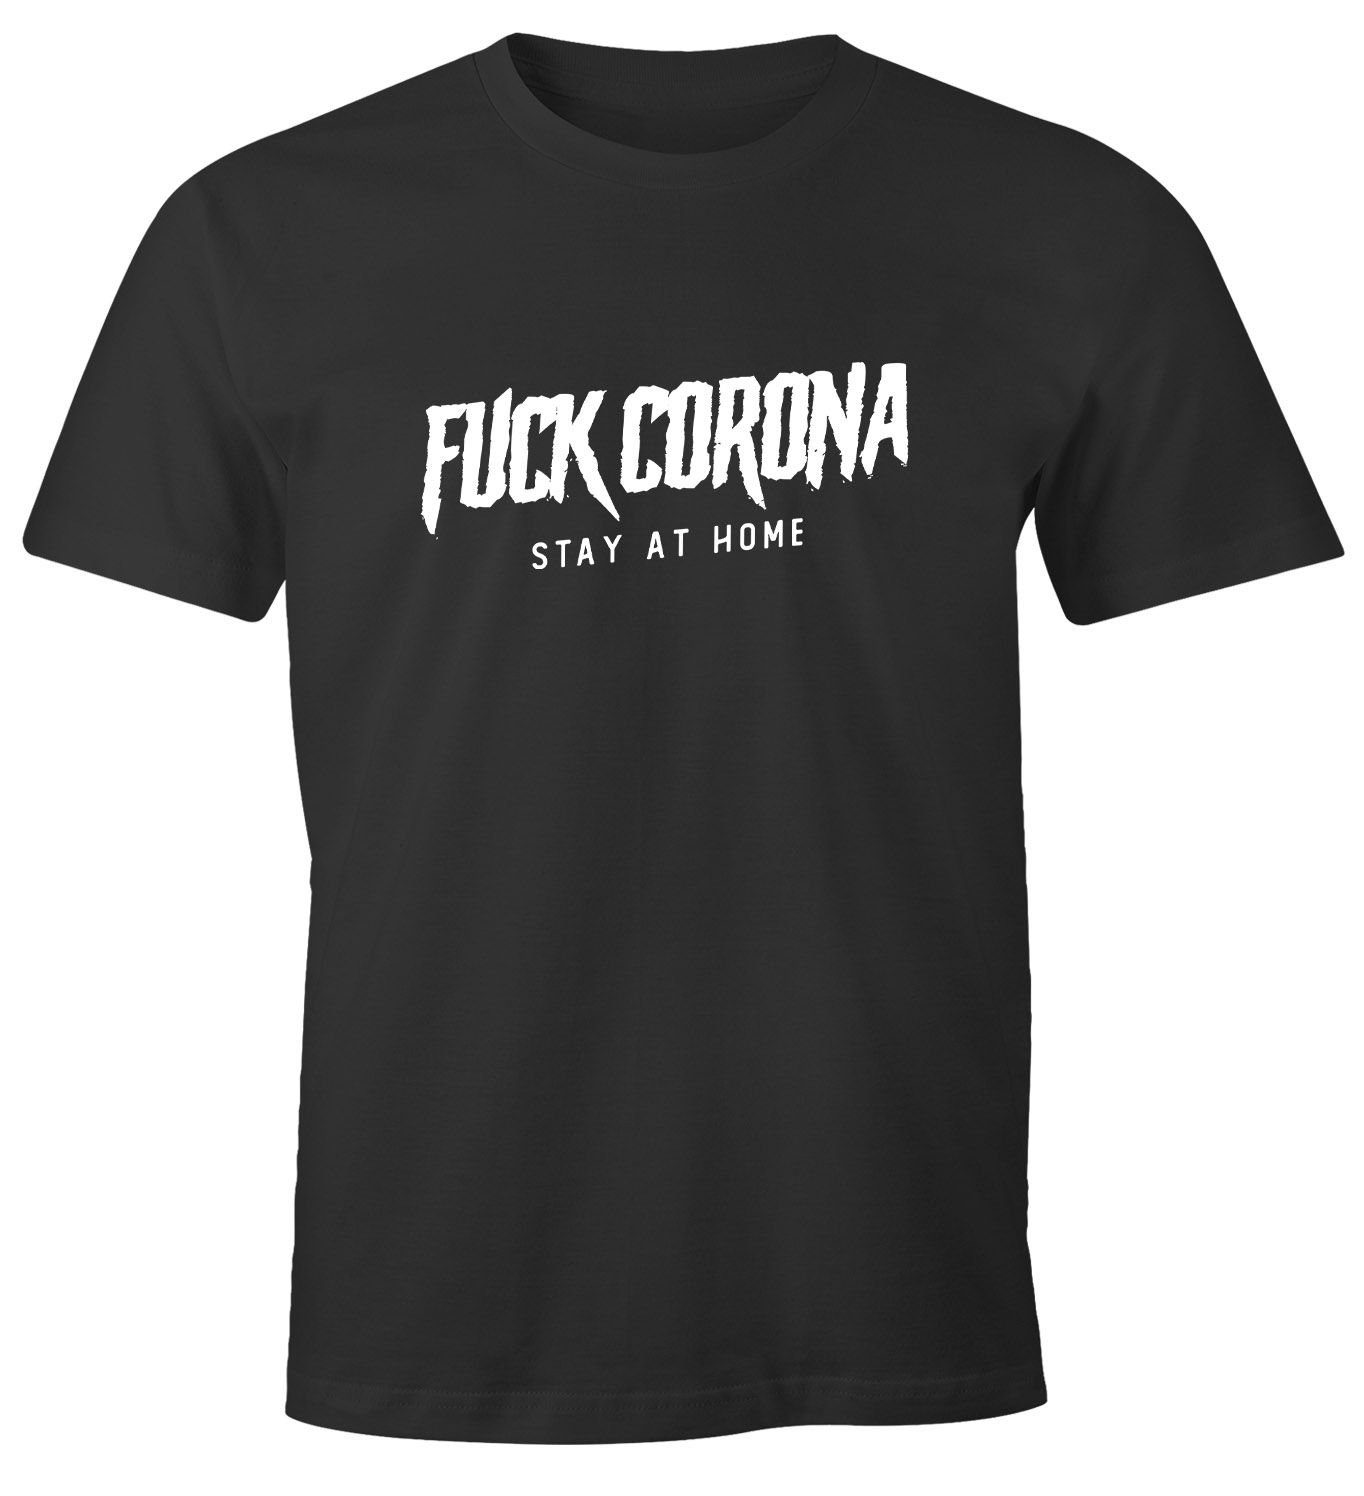 MoonWorks Print-Shirt Herren T-Shirt Fuck Corona stay at home Statement Botschaft Appell Aufruf Flatten the curve Moonworks® mit Print